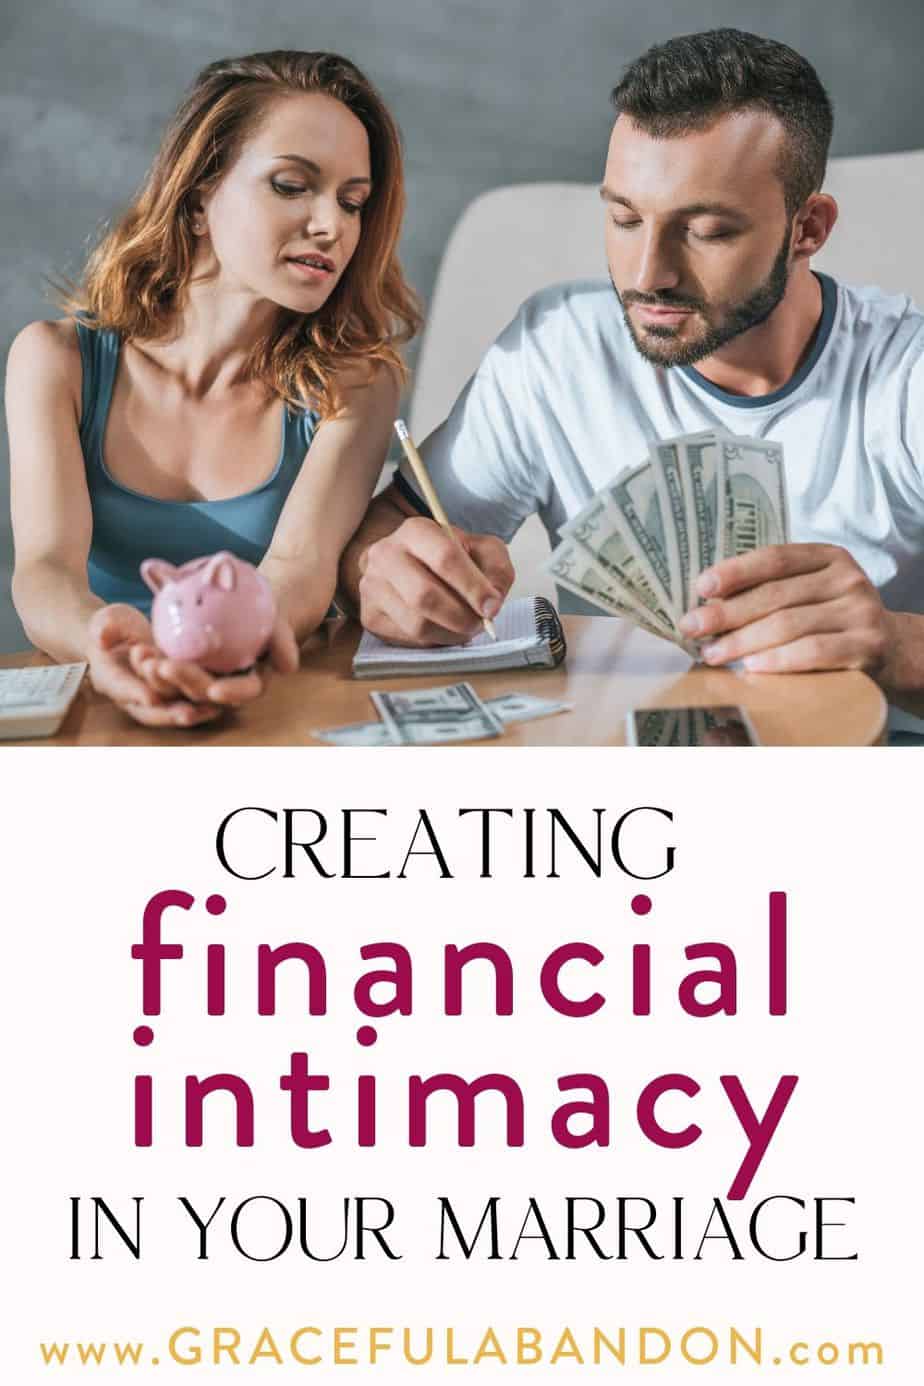 Money In Marriage Do Finances Impact Intimacy?